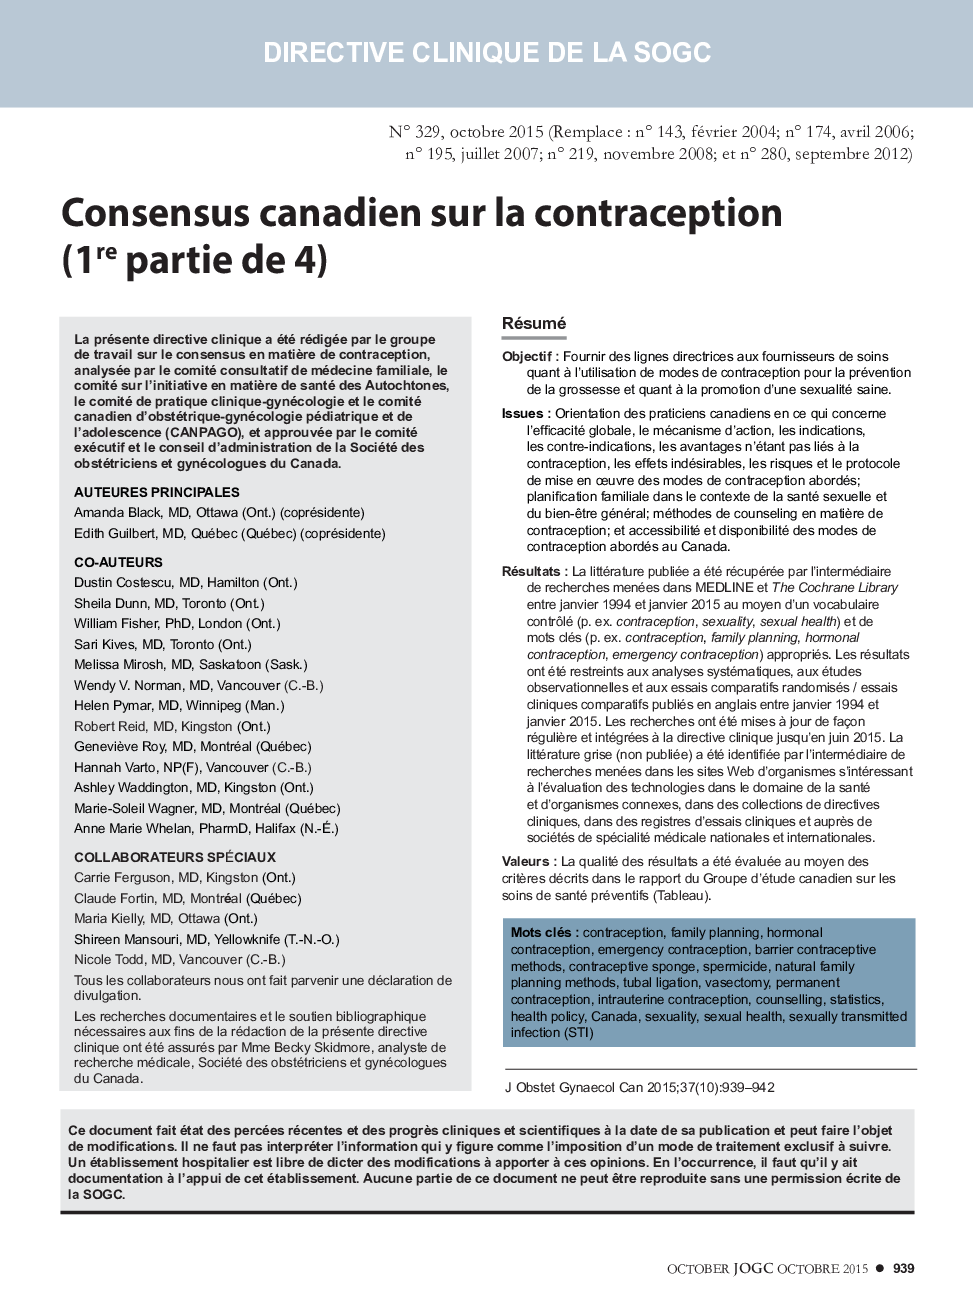 Consensus canadien sur la contraception (1re partie de 4)